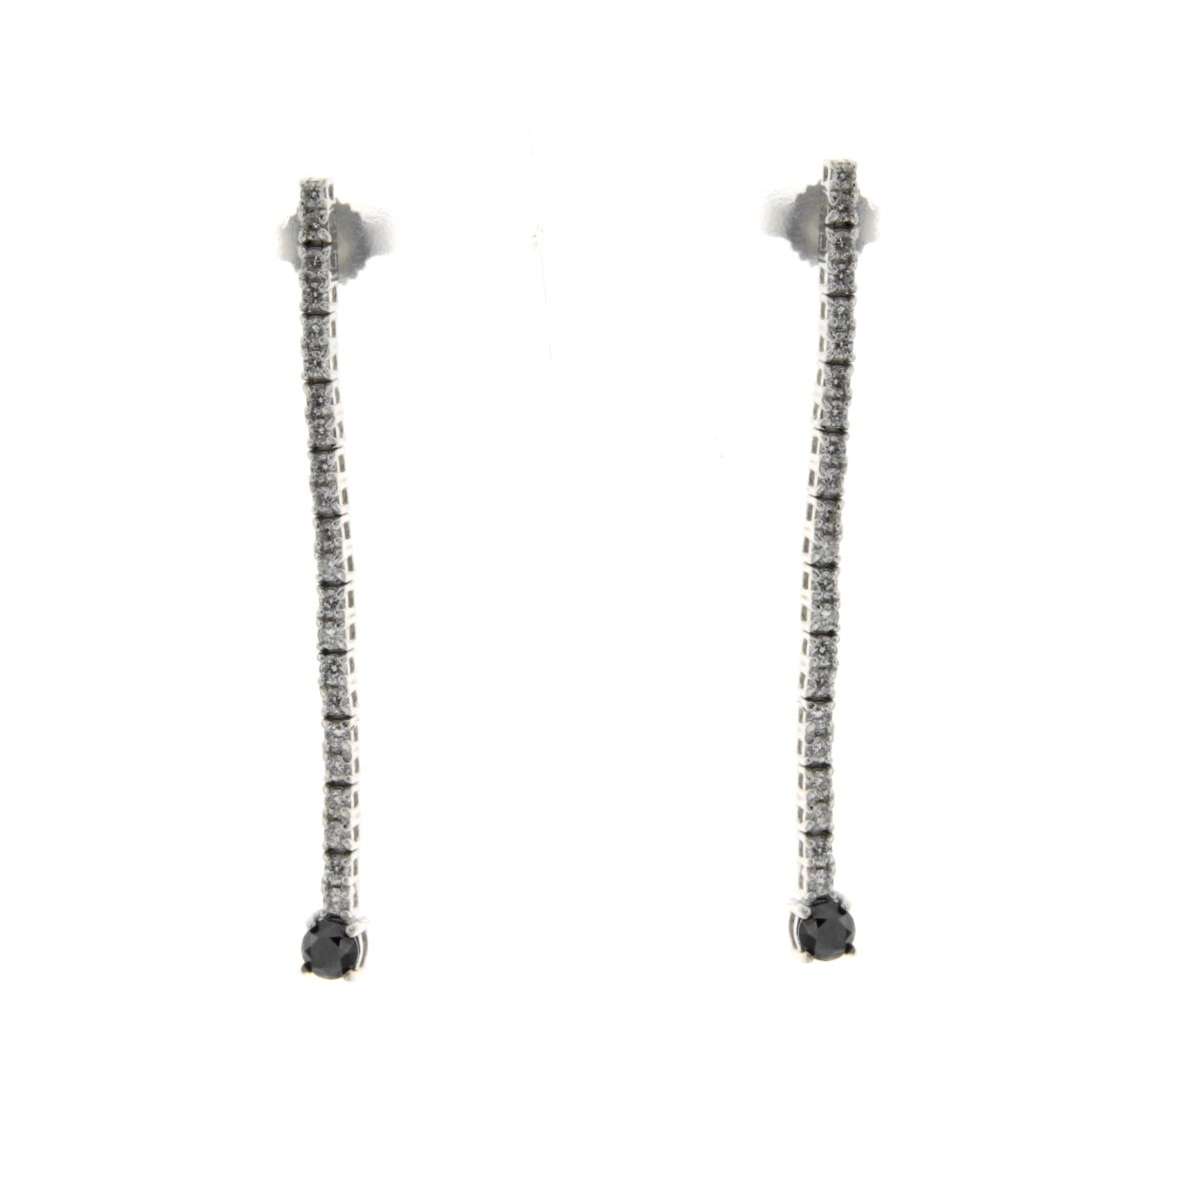 Tennis earrings white and black diamonds G-VS1 0.84 total carats